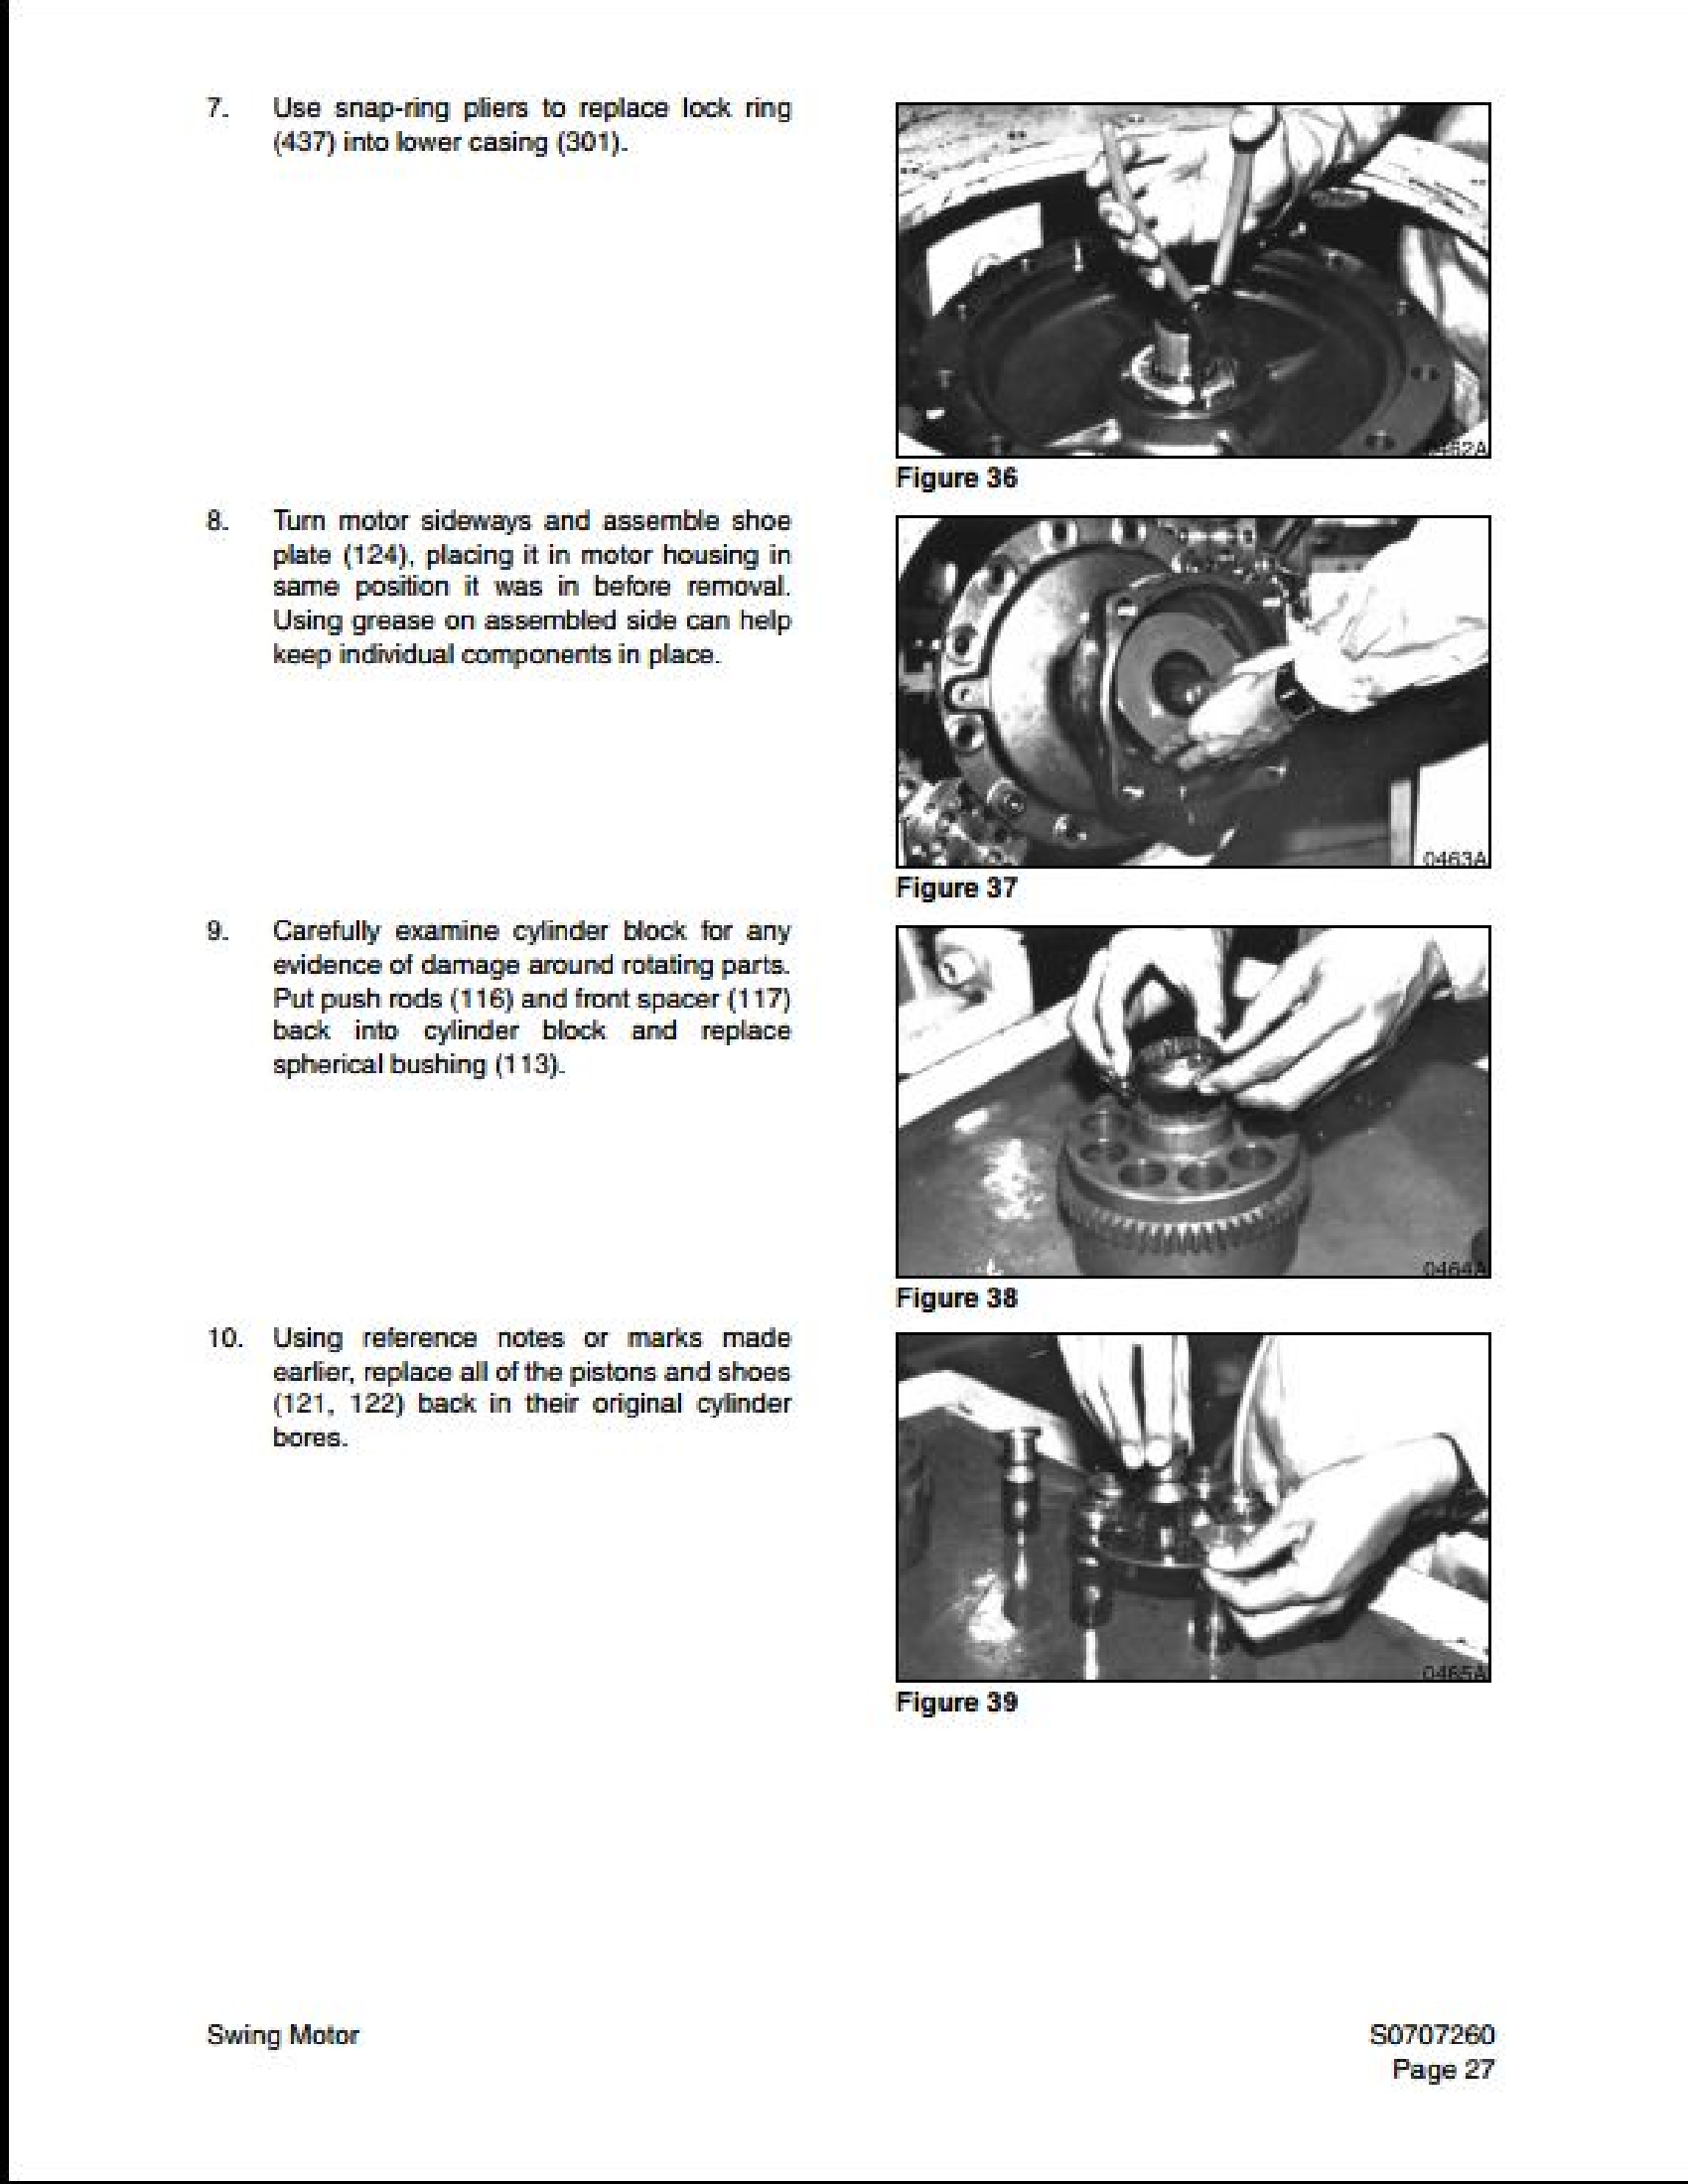 Doosan DX160LC-3 Crawled Excavator manual